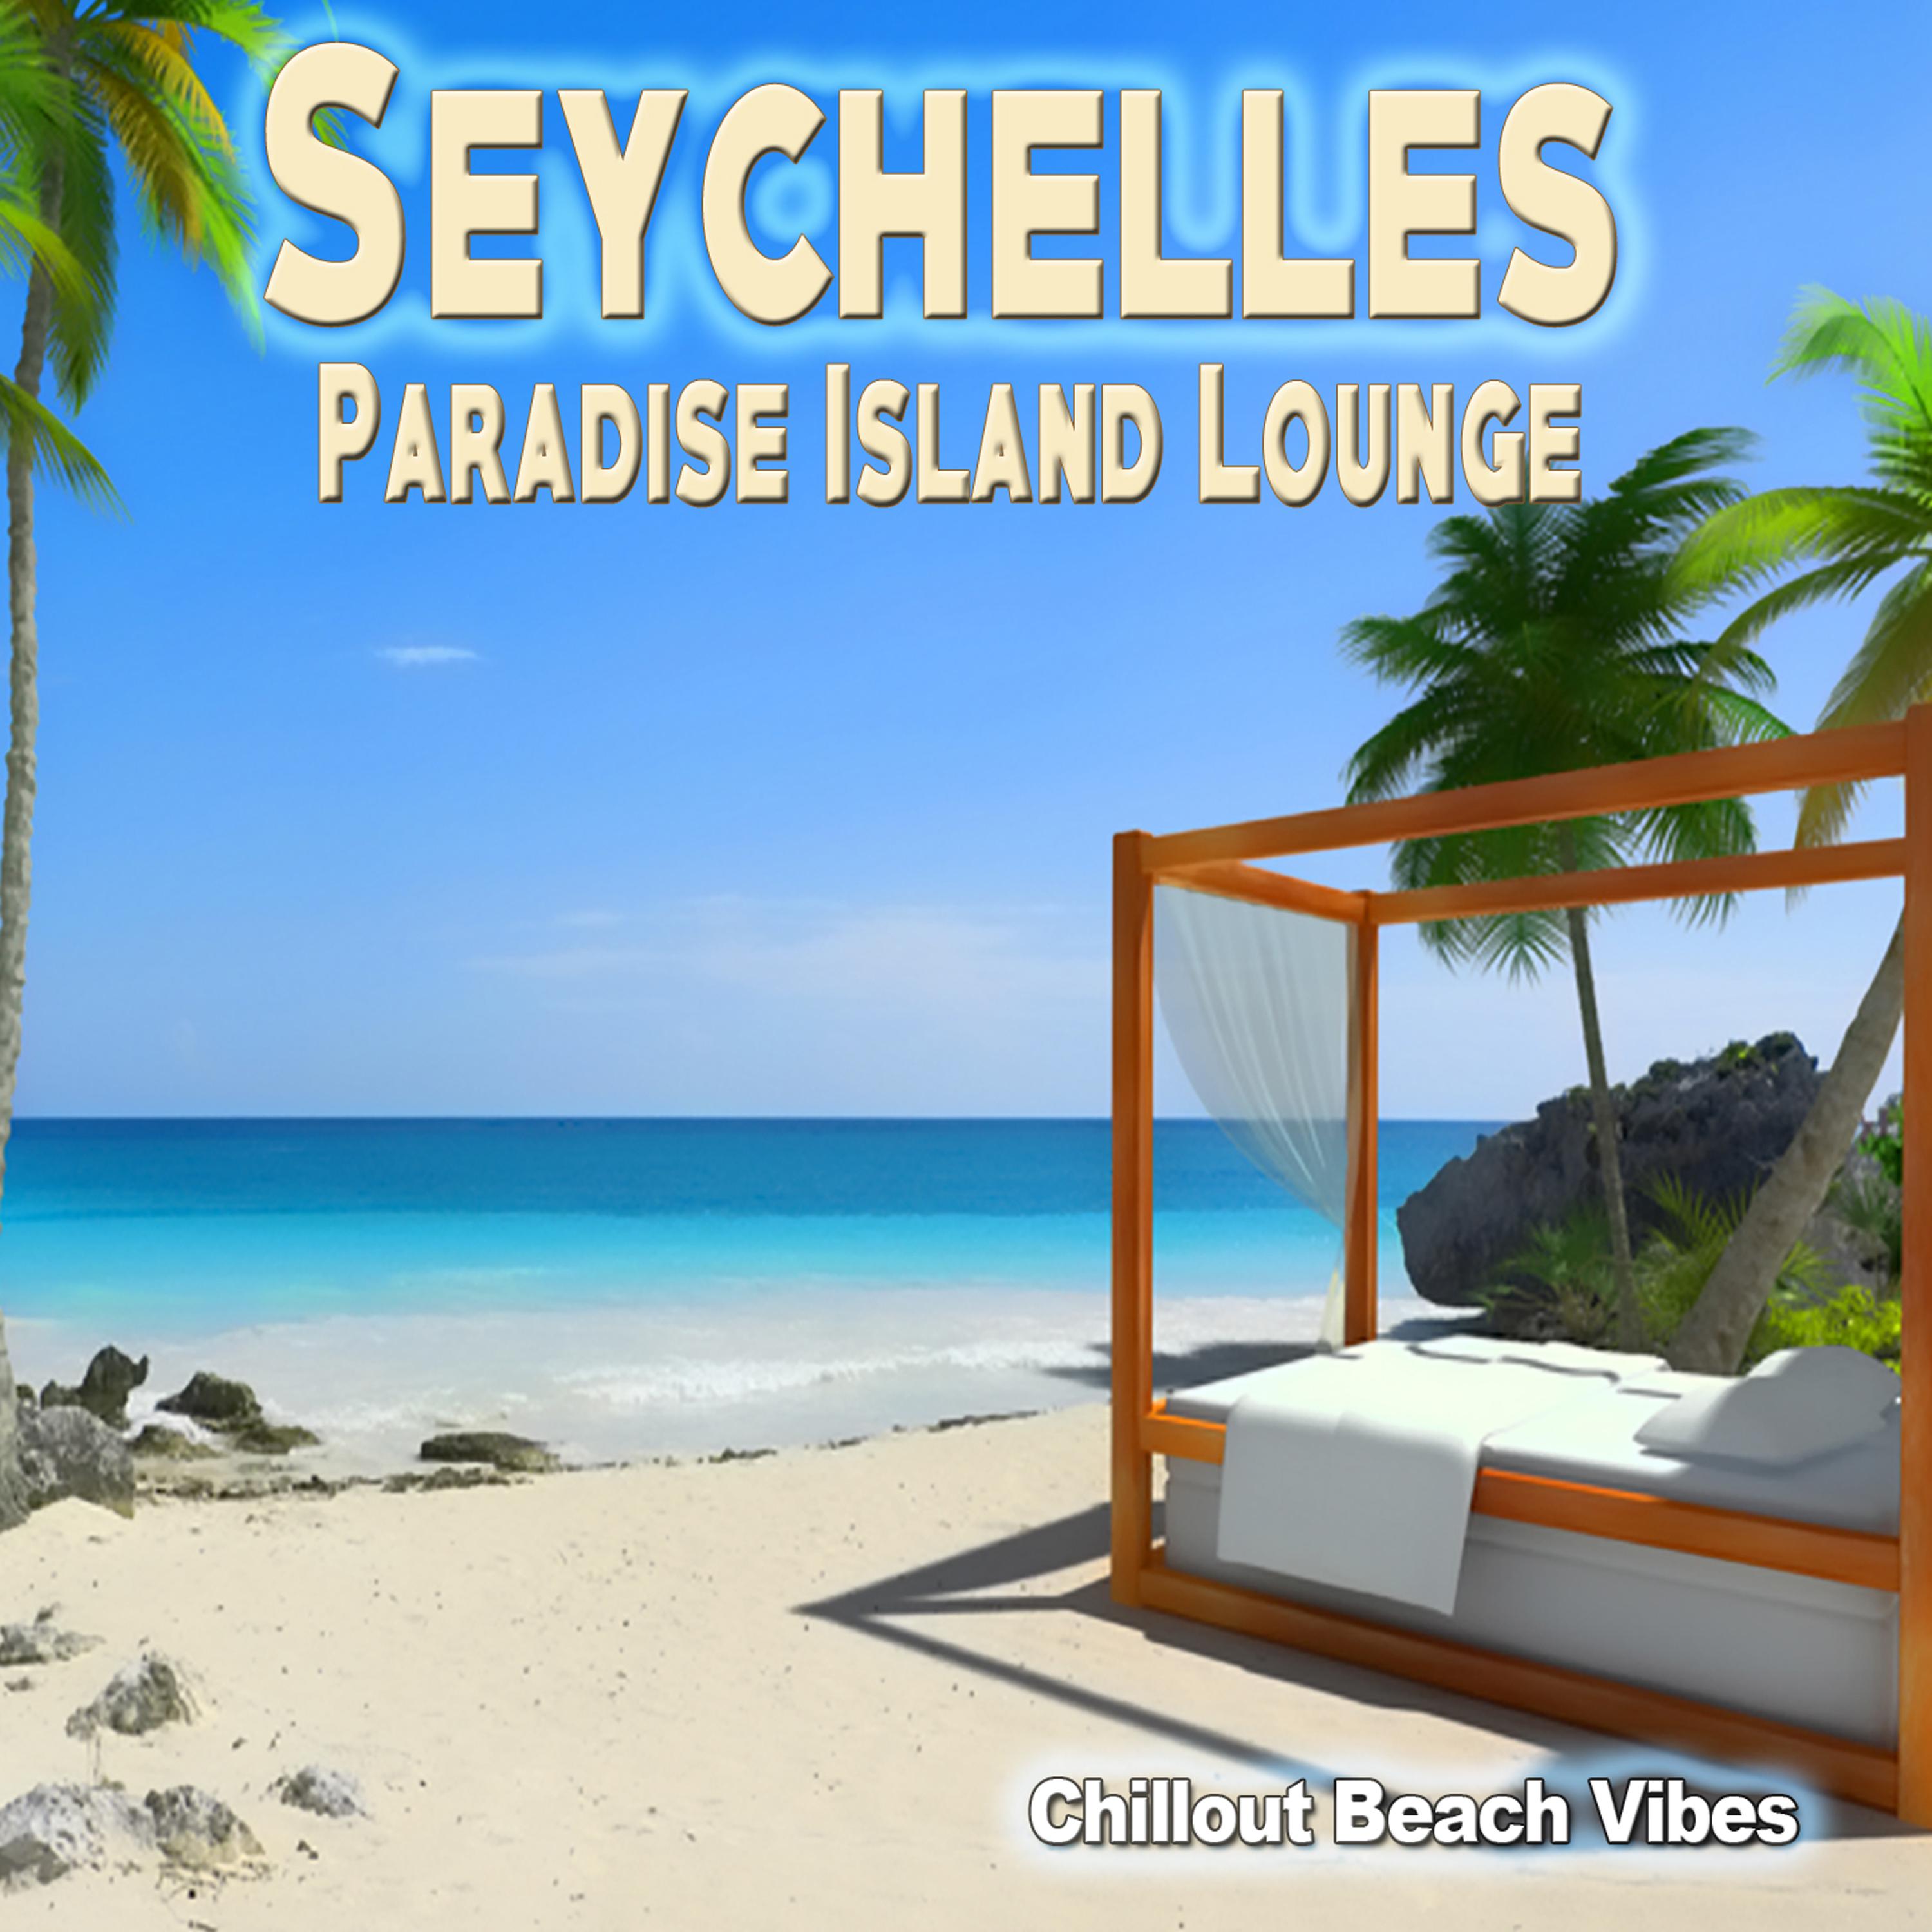 Seychelles Paradise Island Lounge - Chillout Beach Vibes